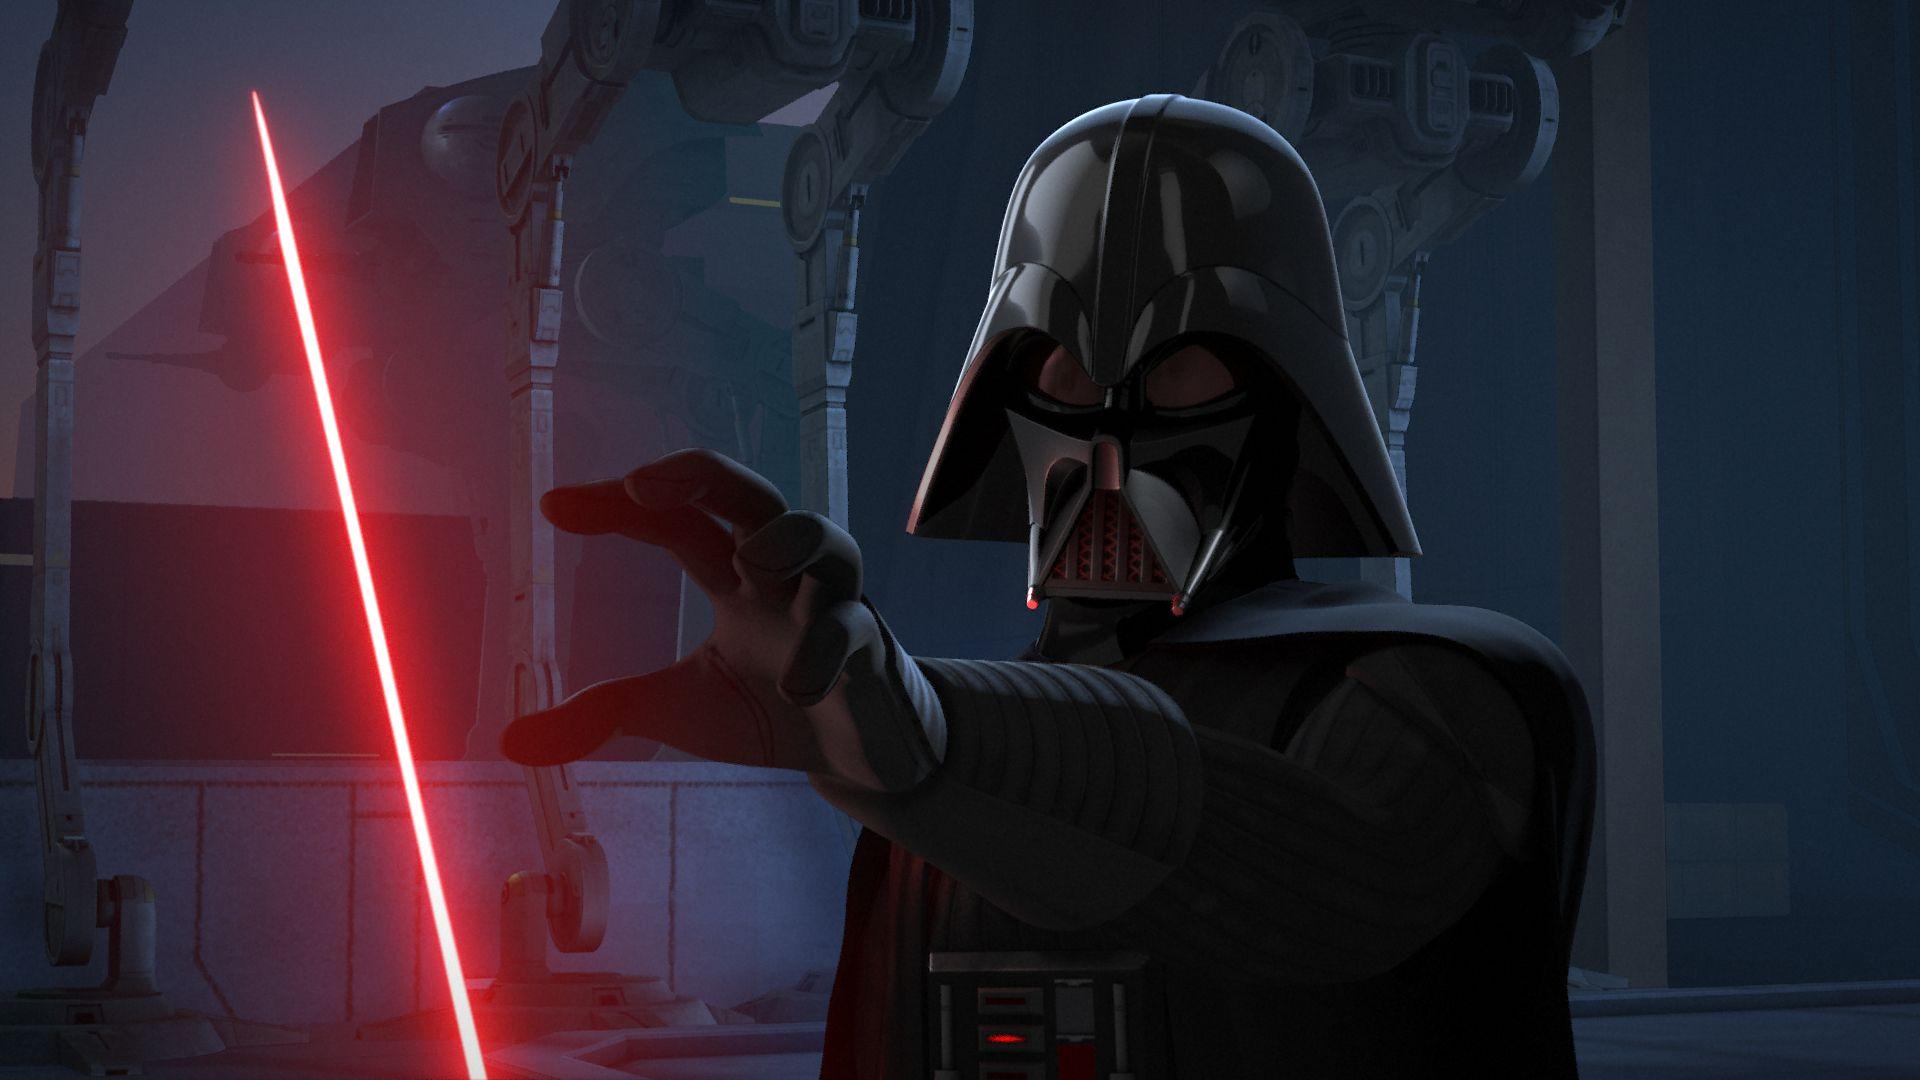 Star Wars Rebels Season 2 Trailer: Darth Vader Returns